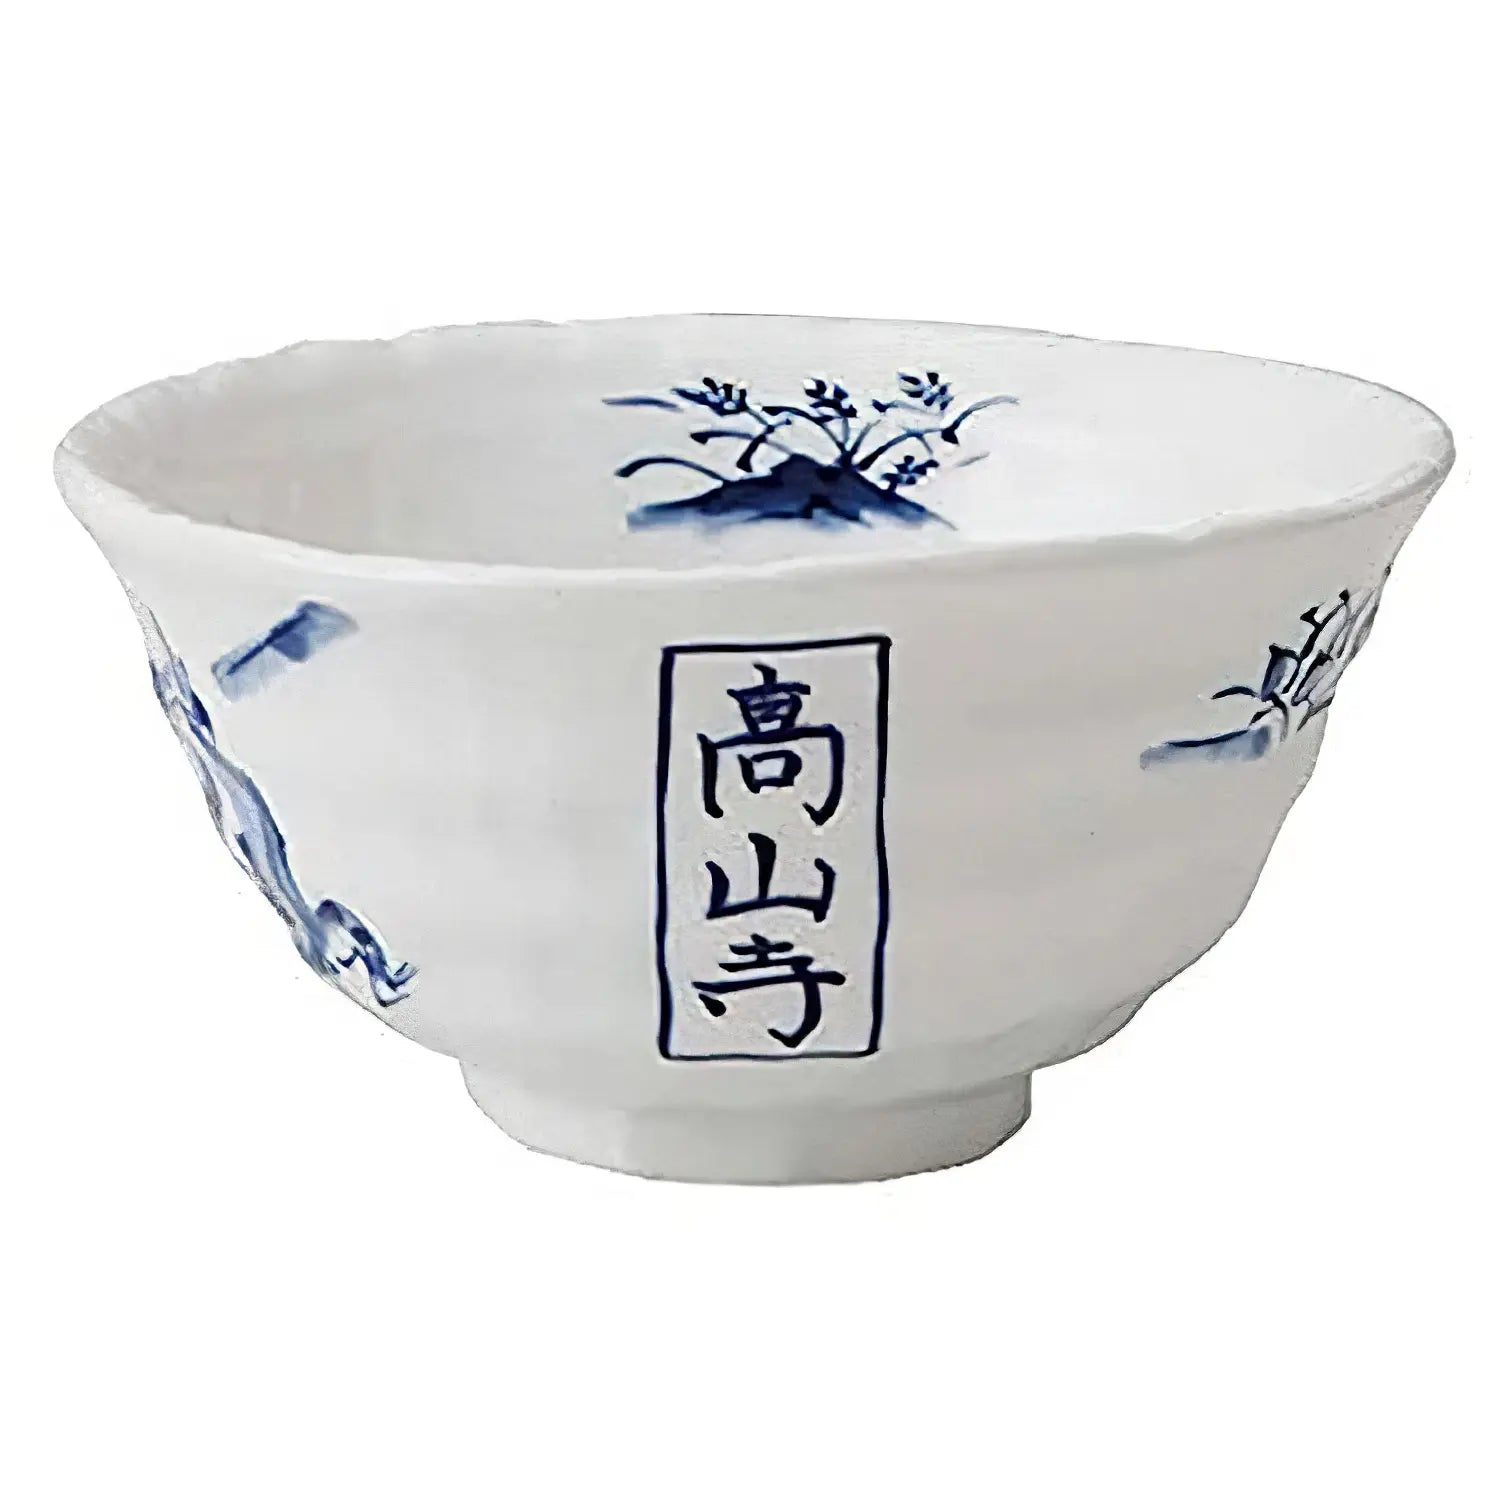 Kouzanji 12Cm Tkg Mino Ware Porcelain Rice Bowl - Premium Quality